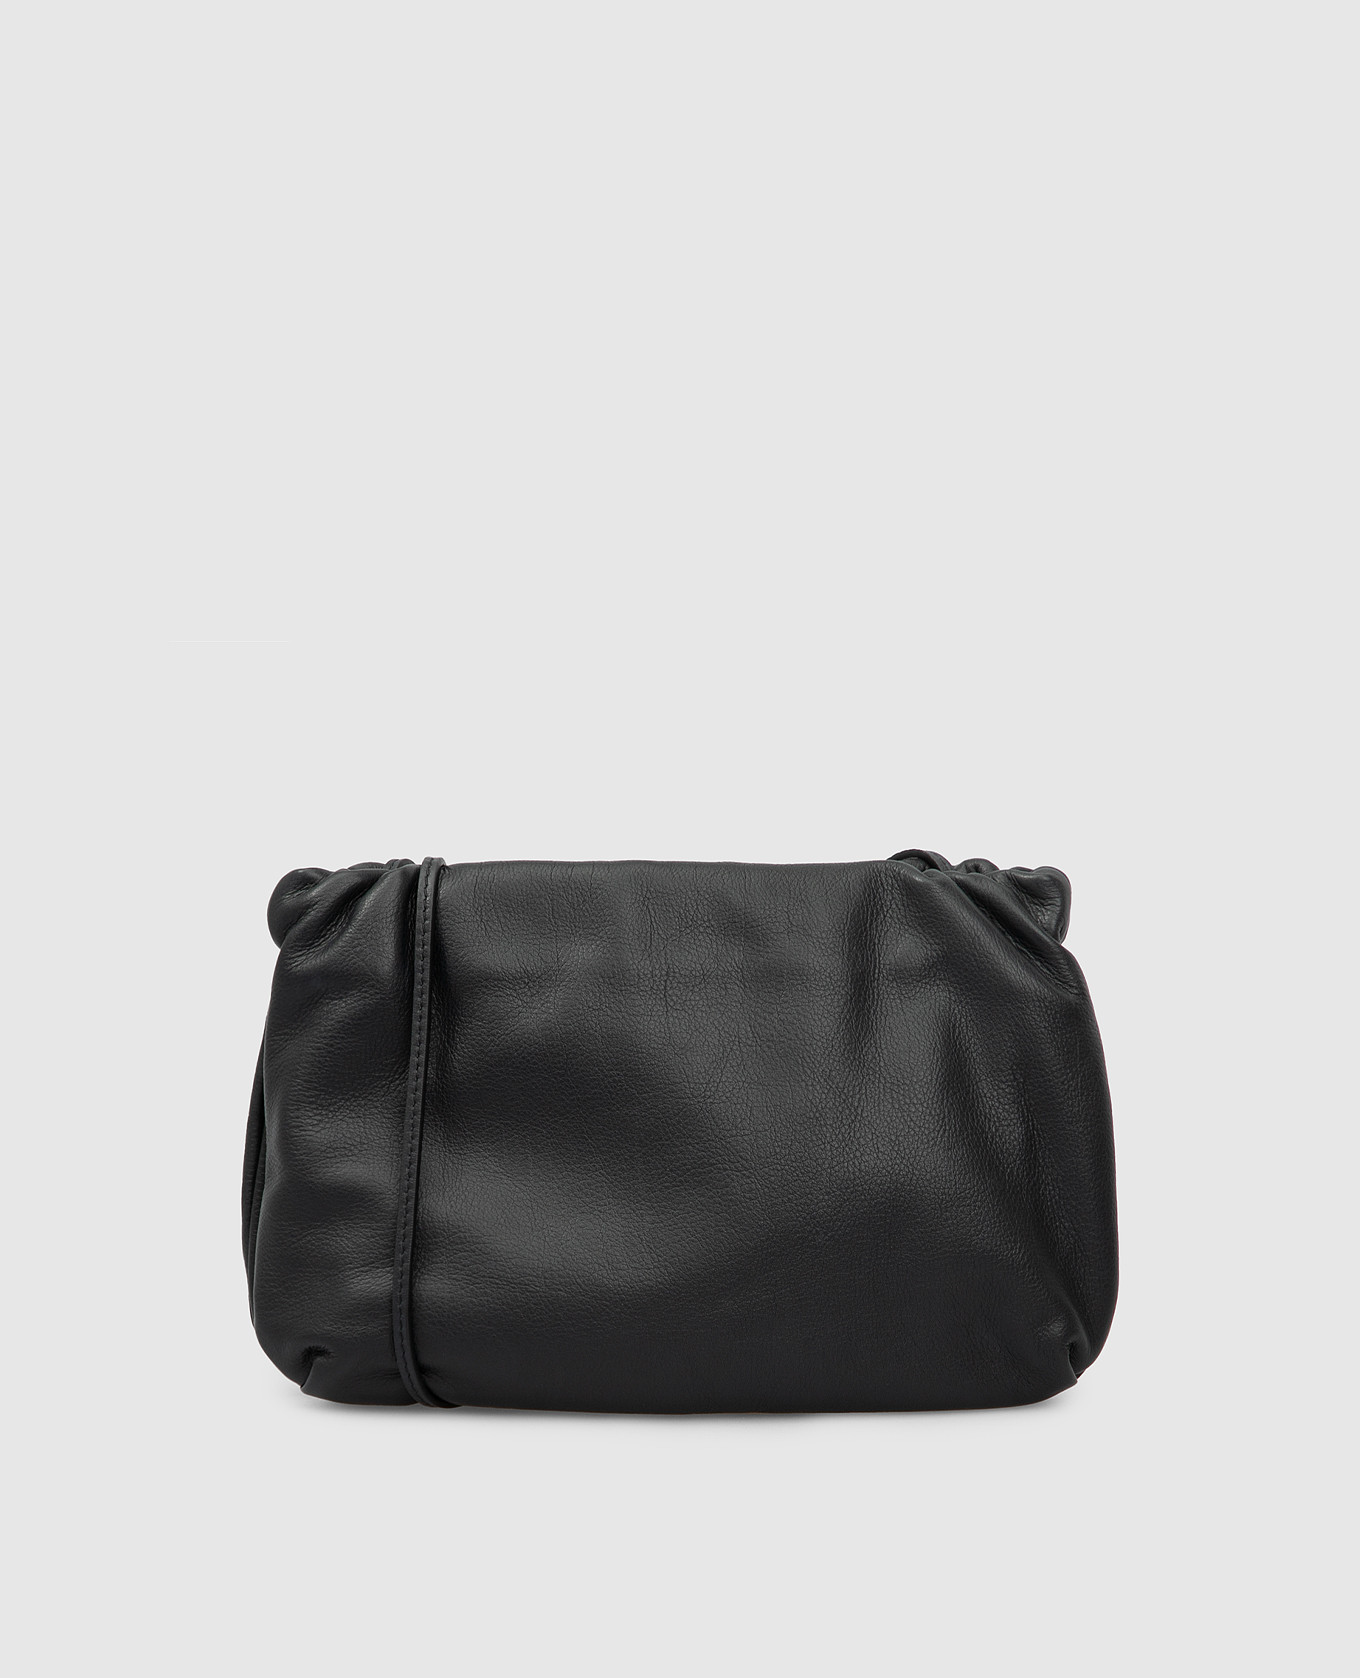 Bourse leather bag